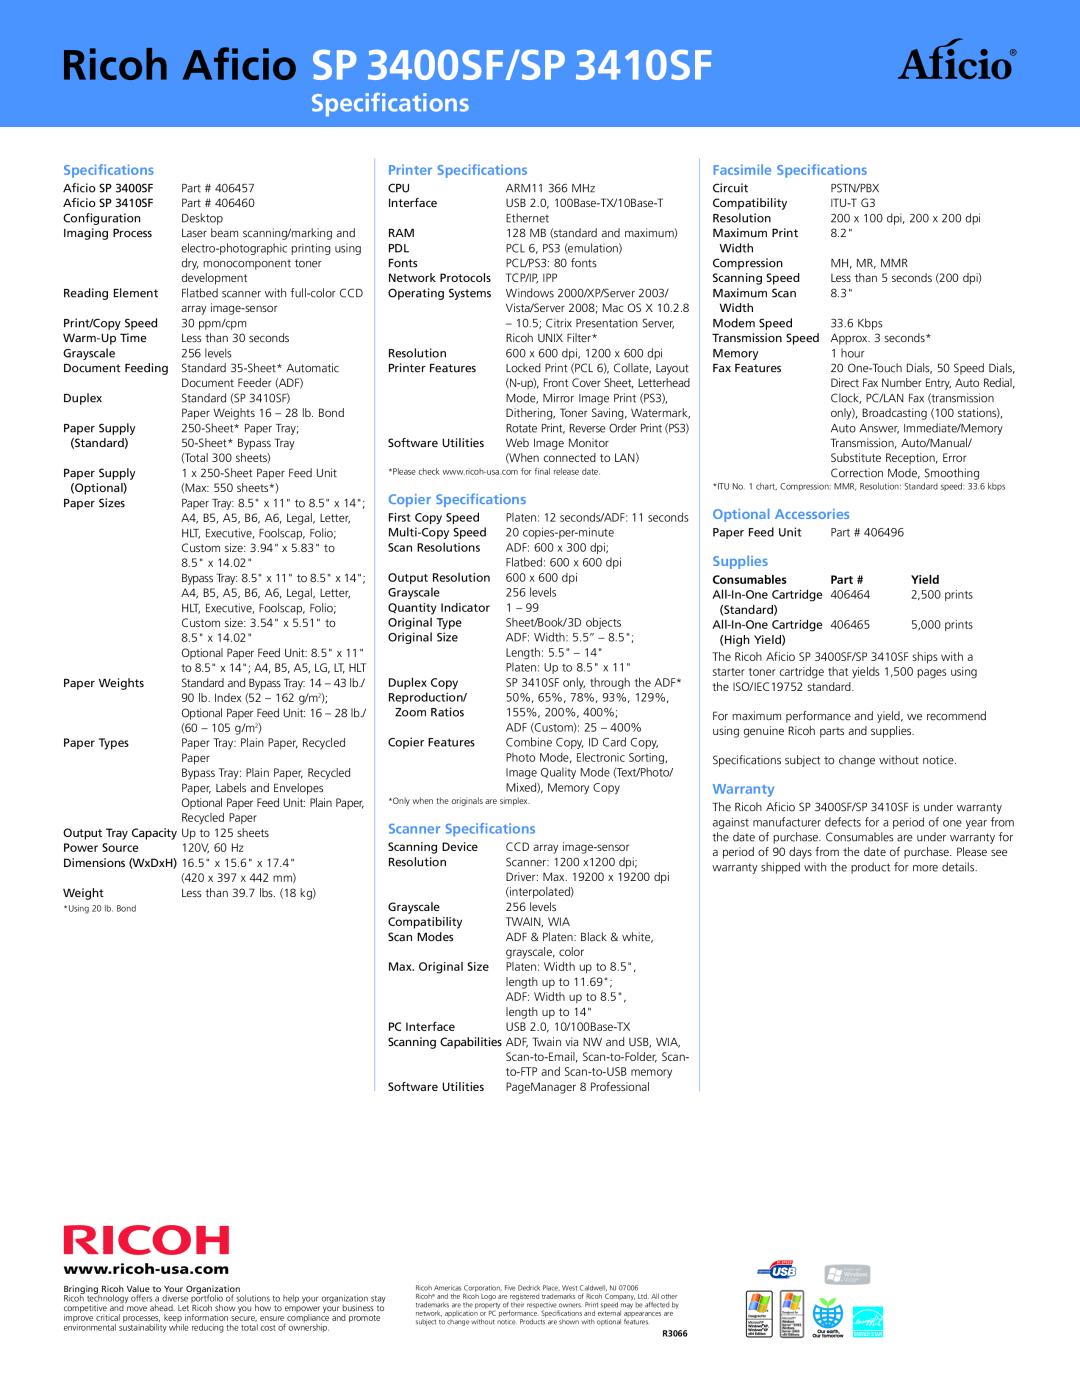 Ricoh manual Ricoh Aficio SP 3400SF/SP 3410SF, Printer Specifications, Copier Specifications, Scanner Specifications 